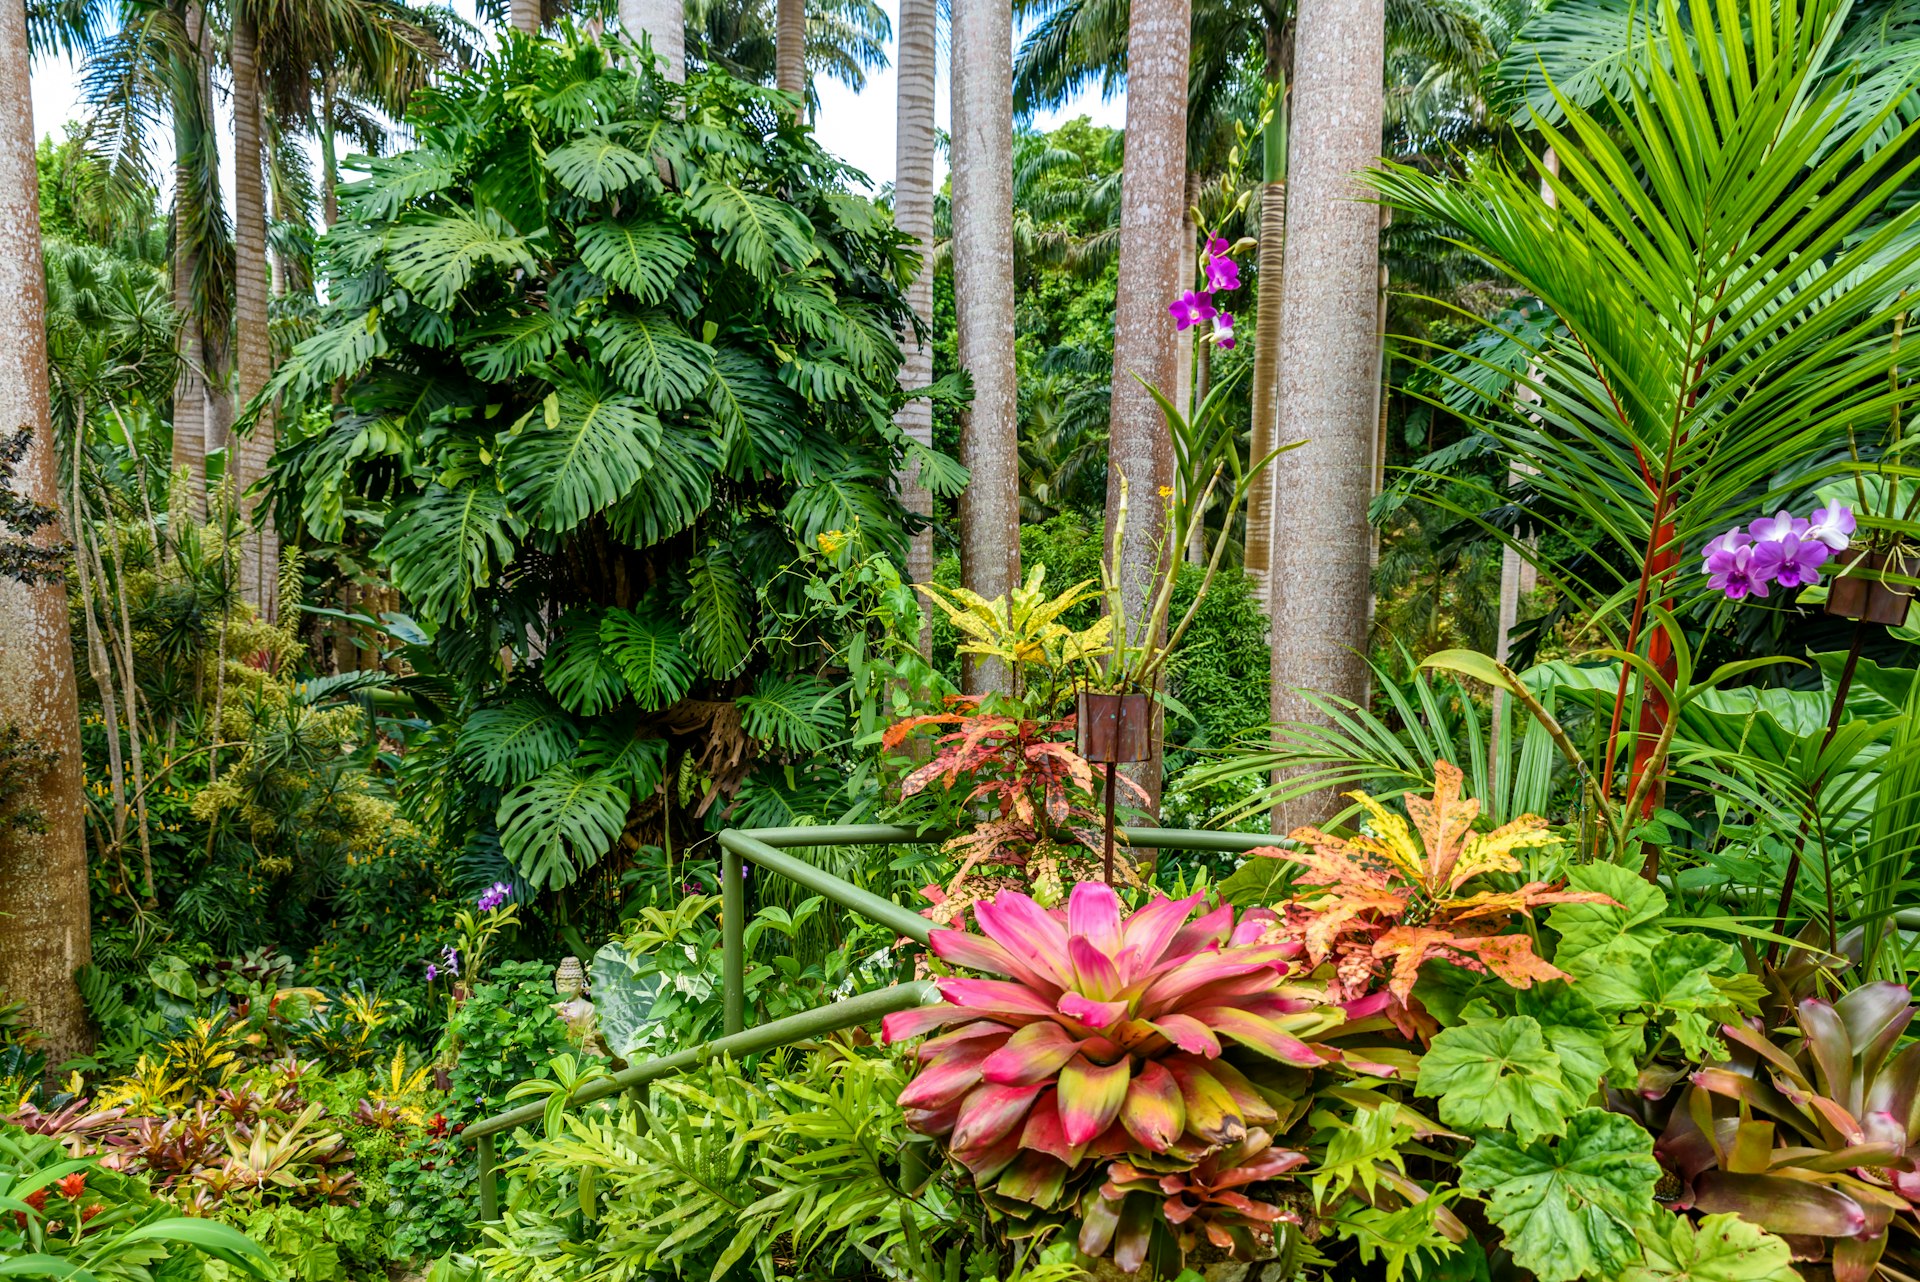 Hunte's Garden on the Caribbean island of Barbados